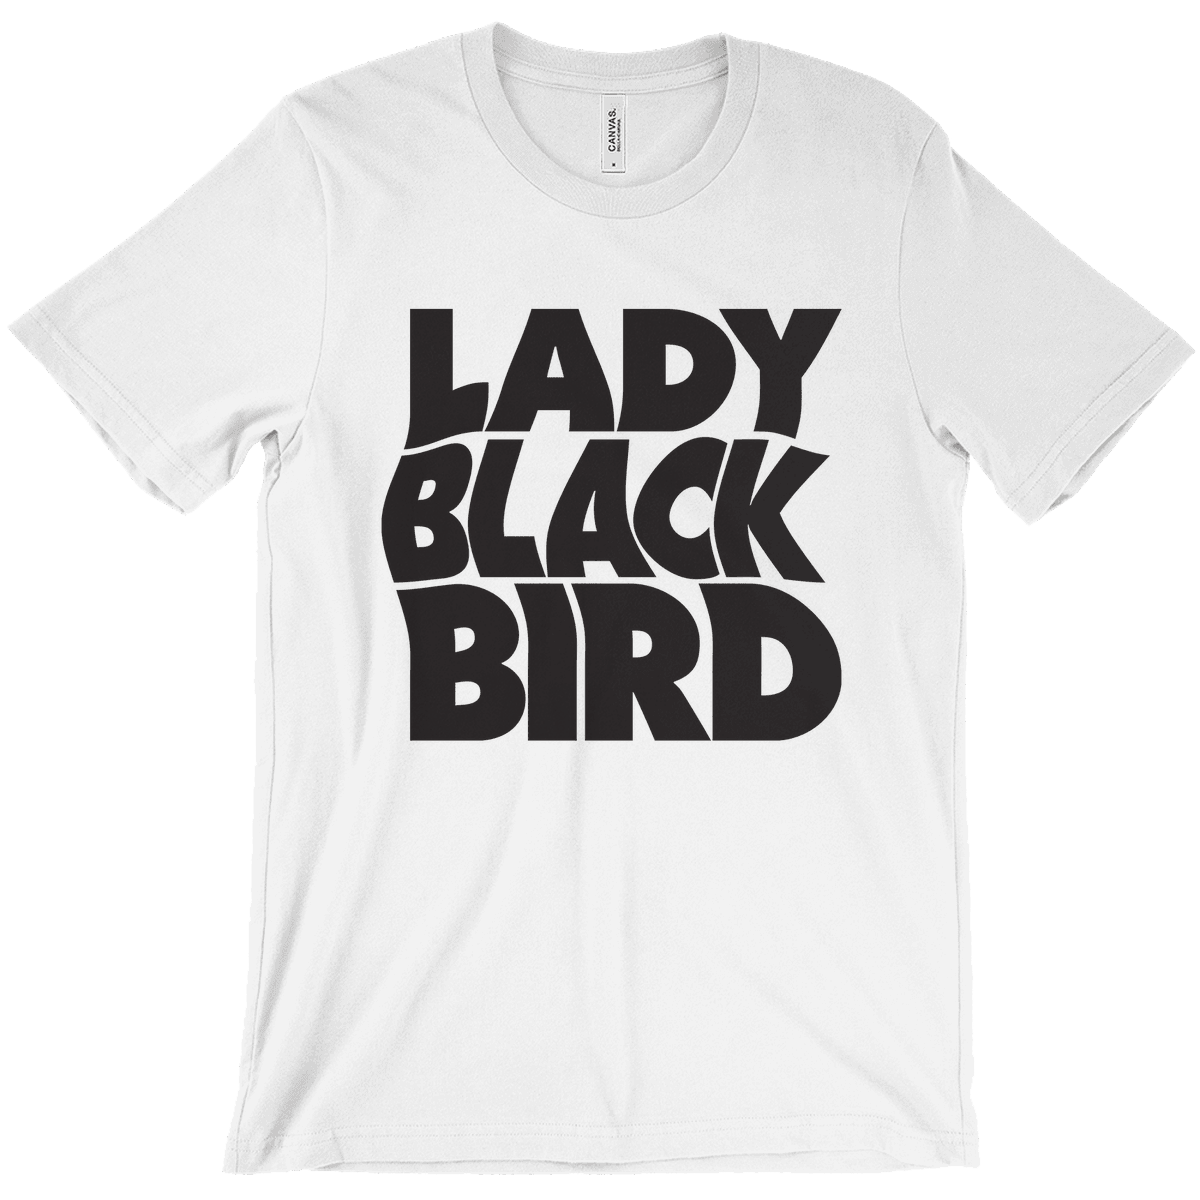 Lady Black Bird - T-Shirt